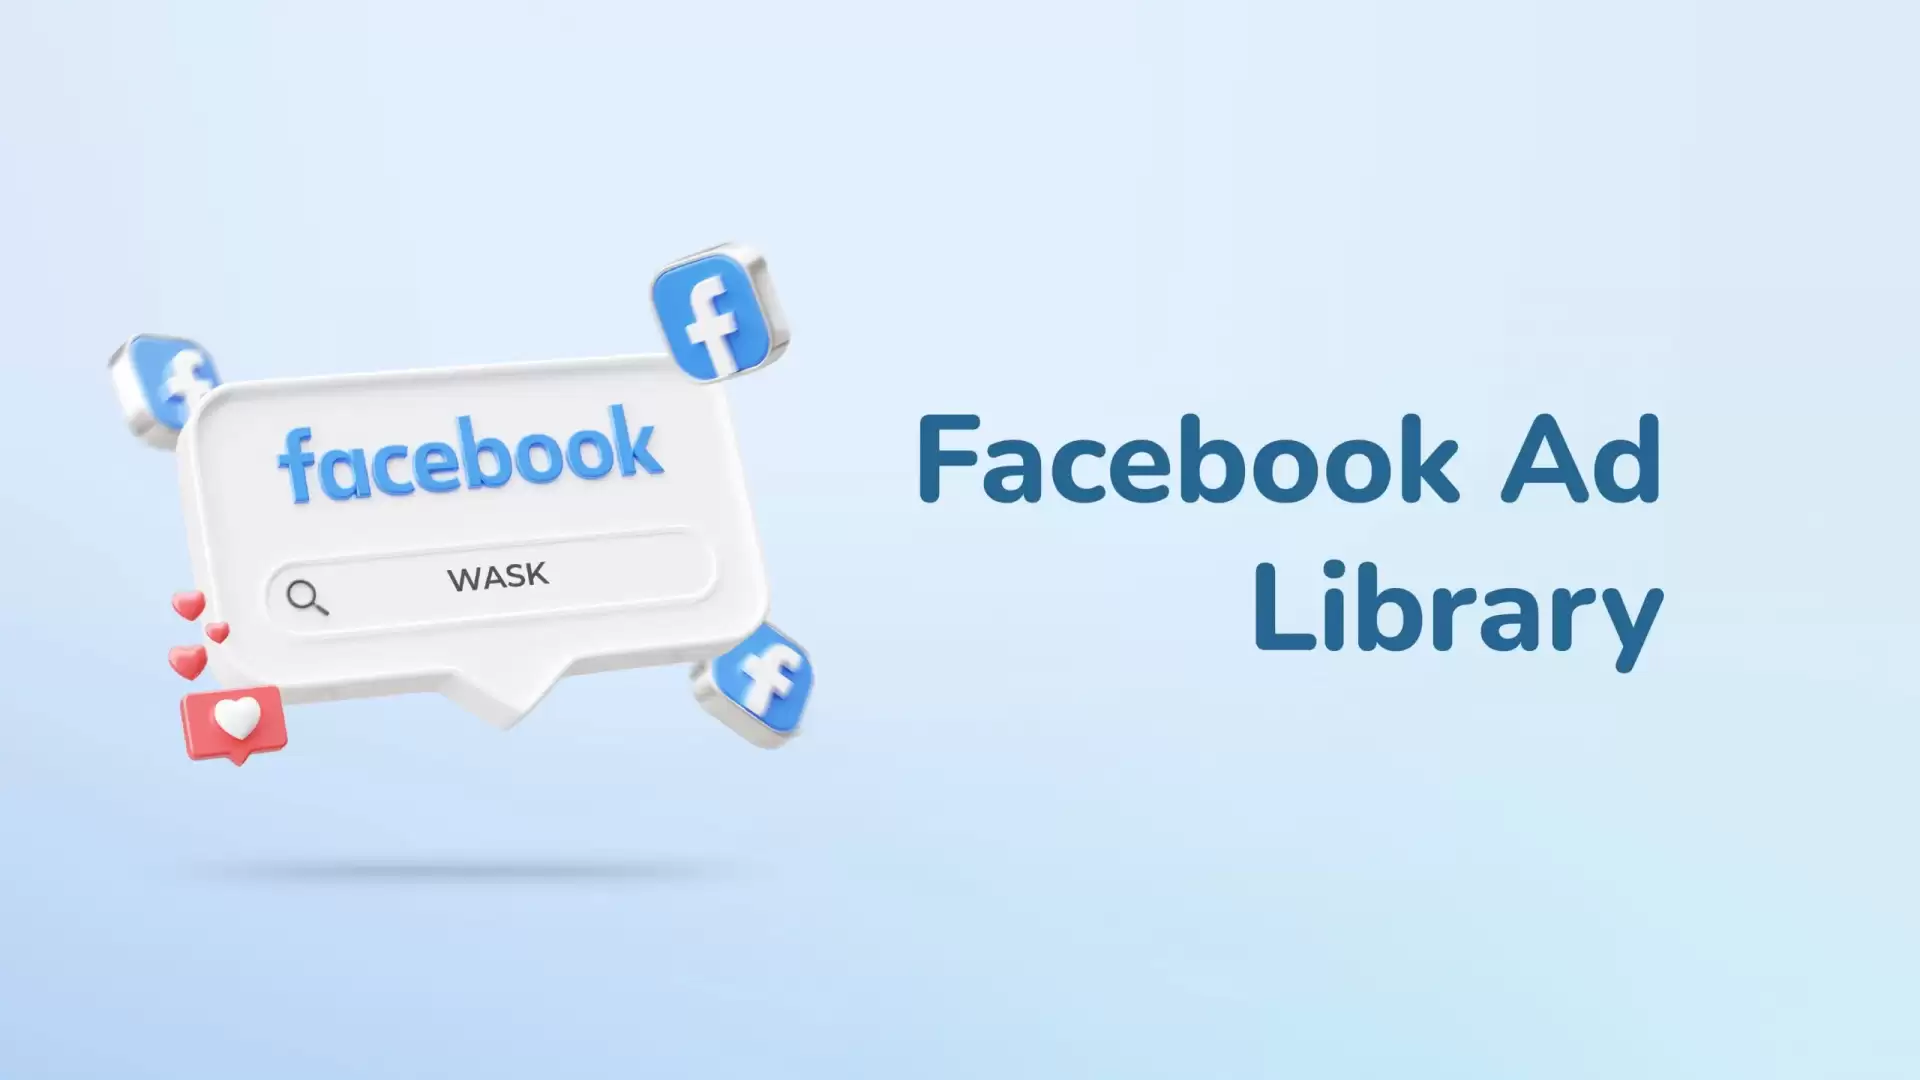 Facebook Ad Library